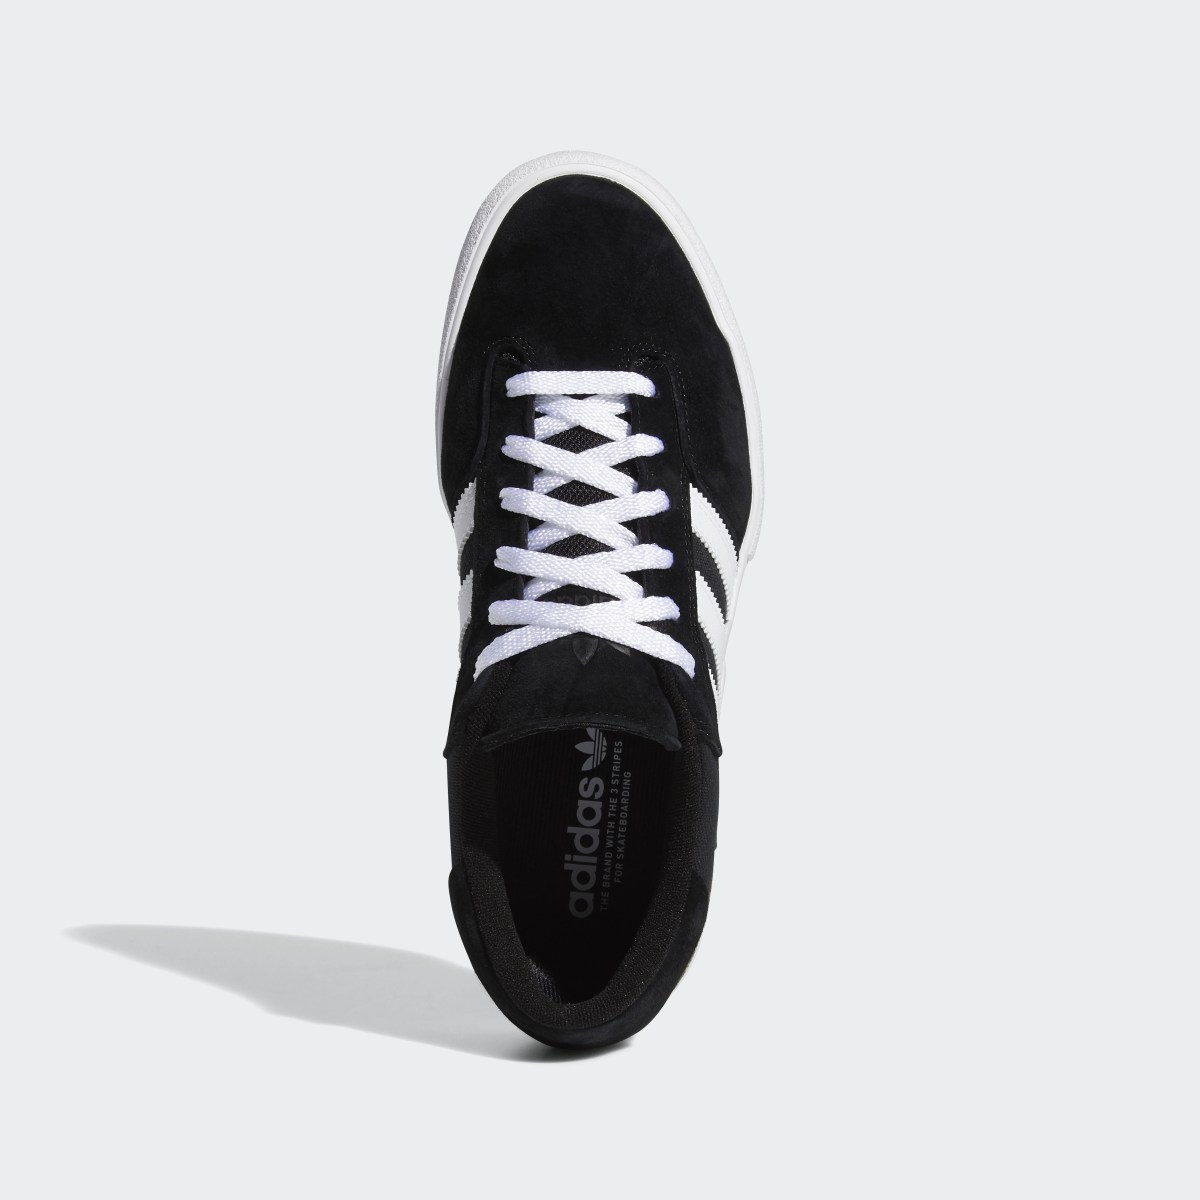 Adidas Matchbreak Super Schuh. 8